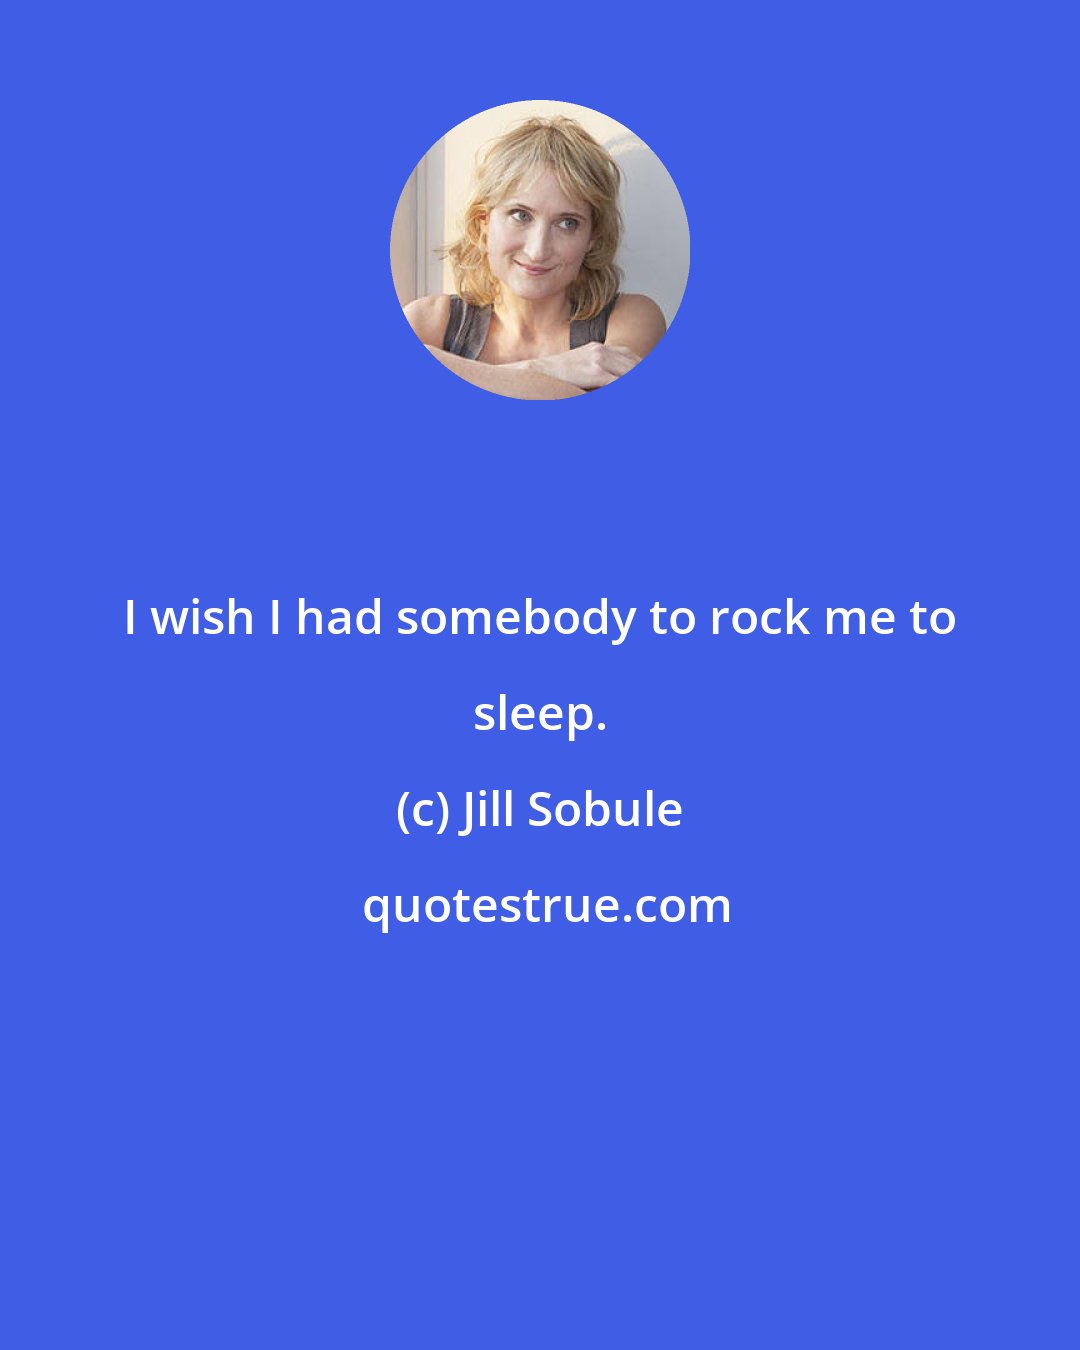 Jill Sobule: I wish I had somebody to rock me to sleep.